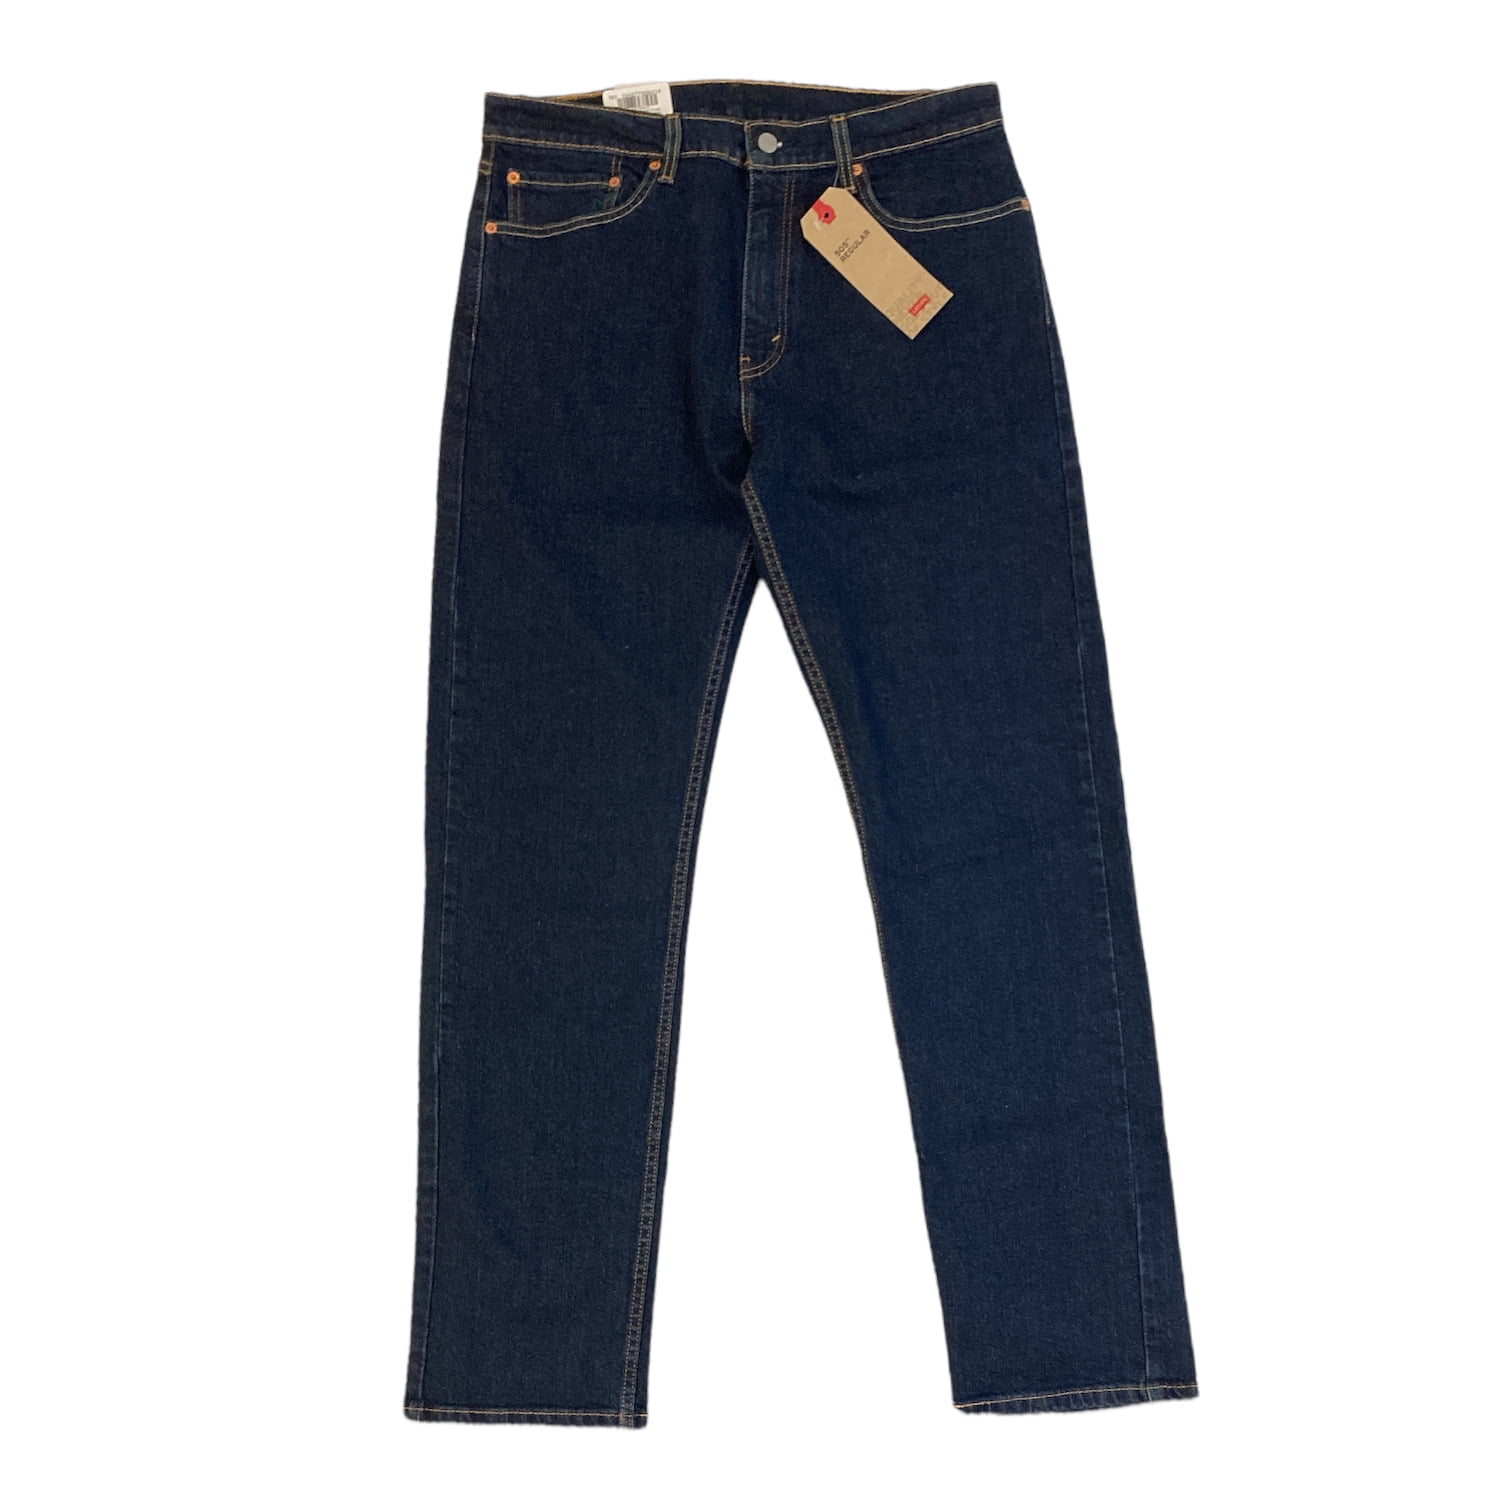 Levi's Men's Stretch Classic Straight Leg 505 Regular Fit 5-Pocket Jeans  (Dark Wash, 34x30)